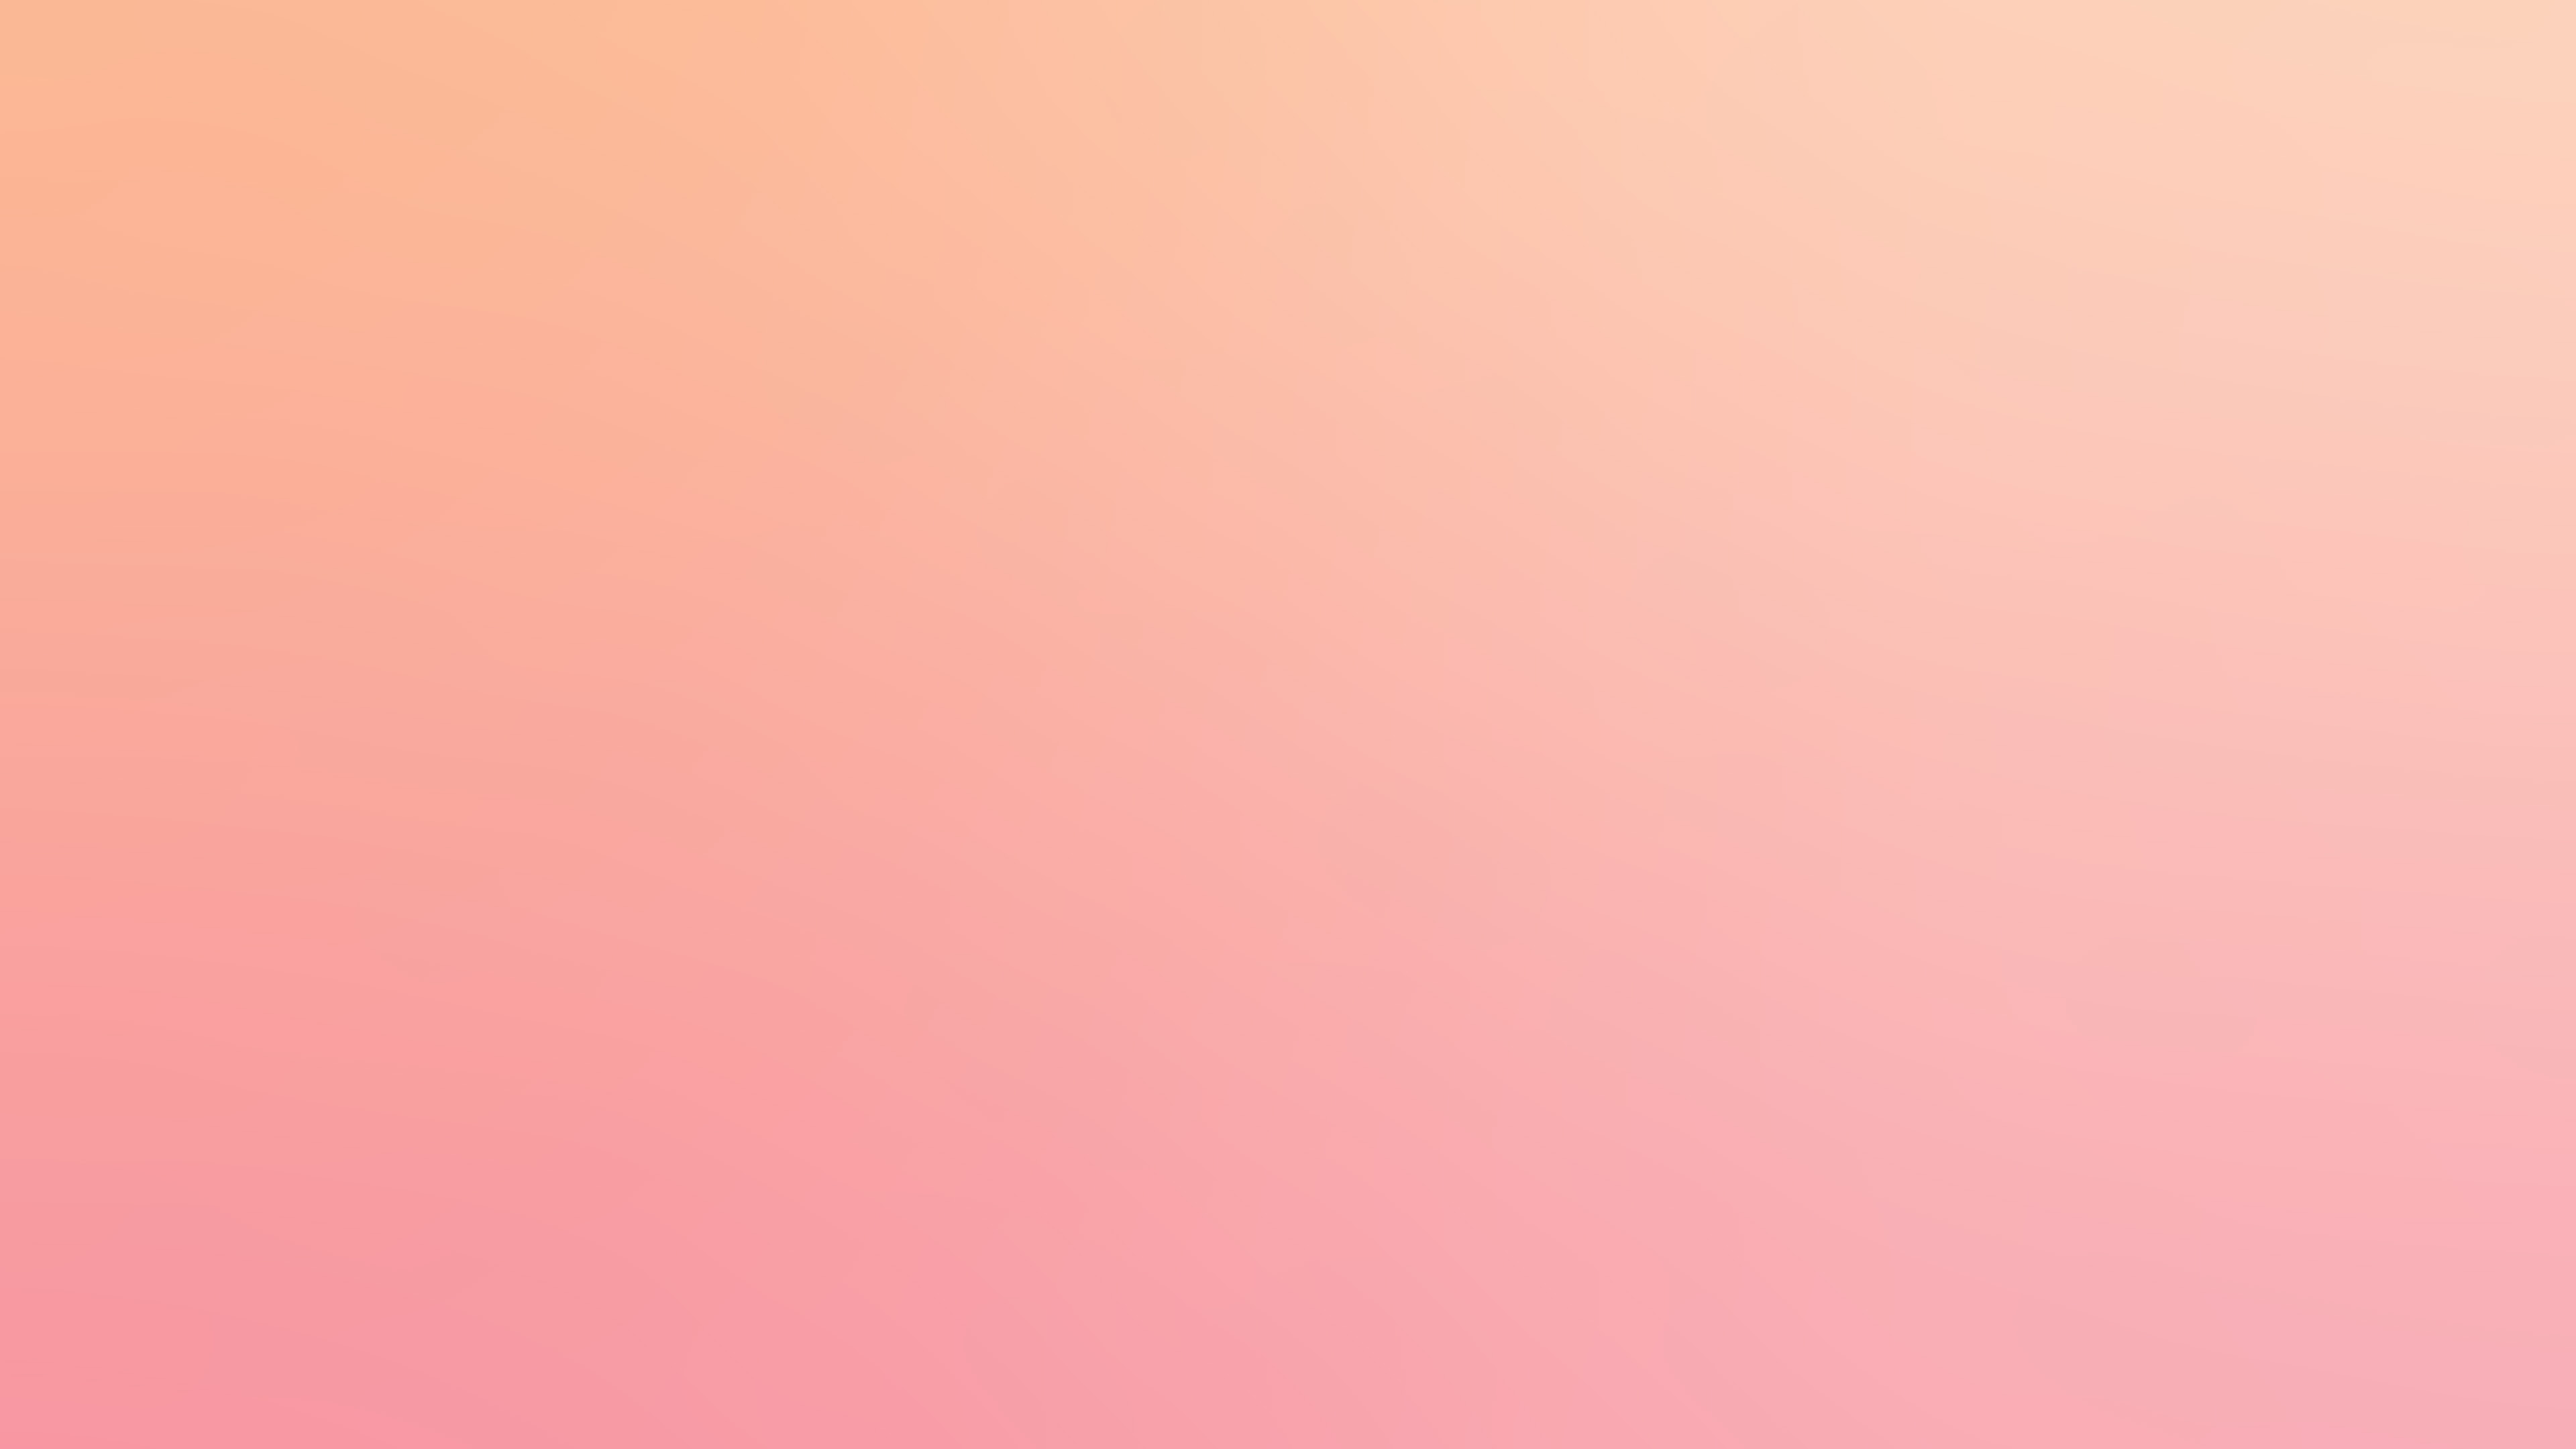 wallpaper for desktop, laptop. pink peach soft pastel blur gradation